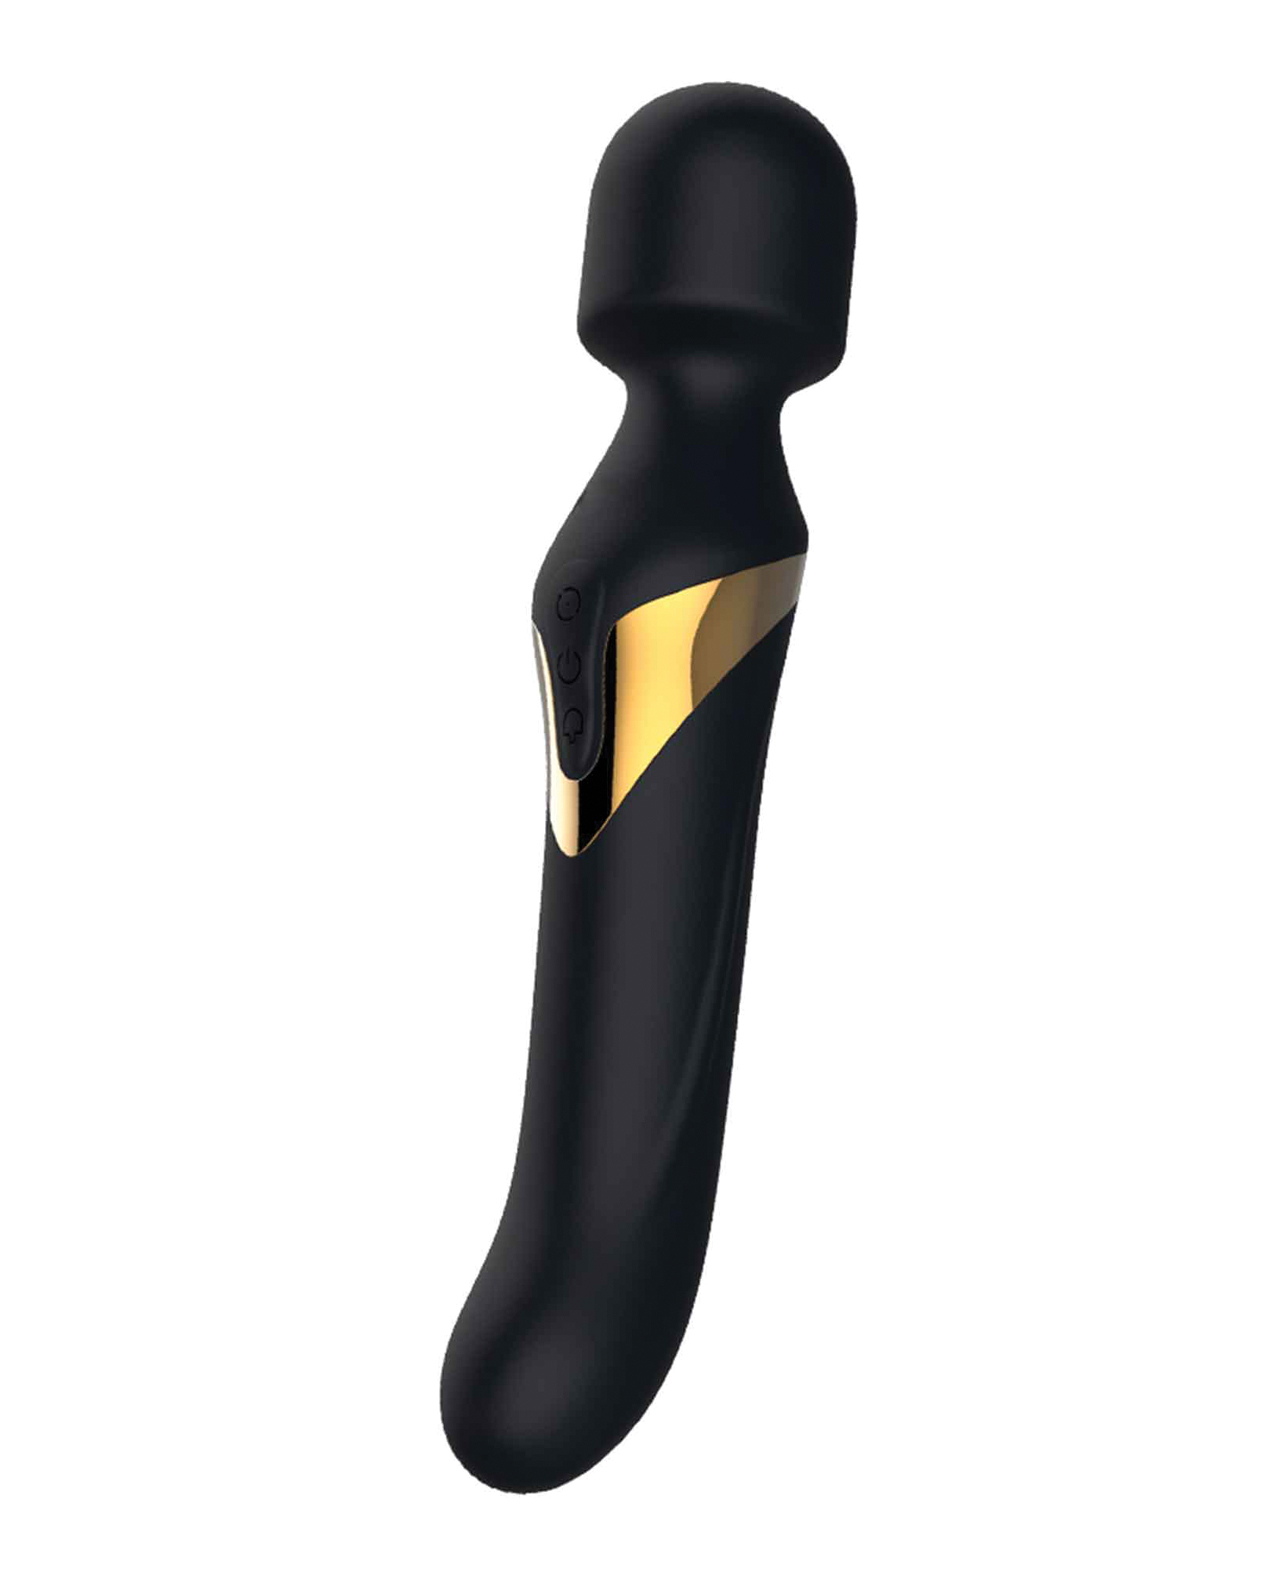 Buy Best Dorcel Dual Orgasms Wand Vibrator - Black/Gold